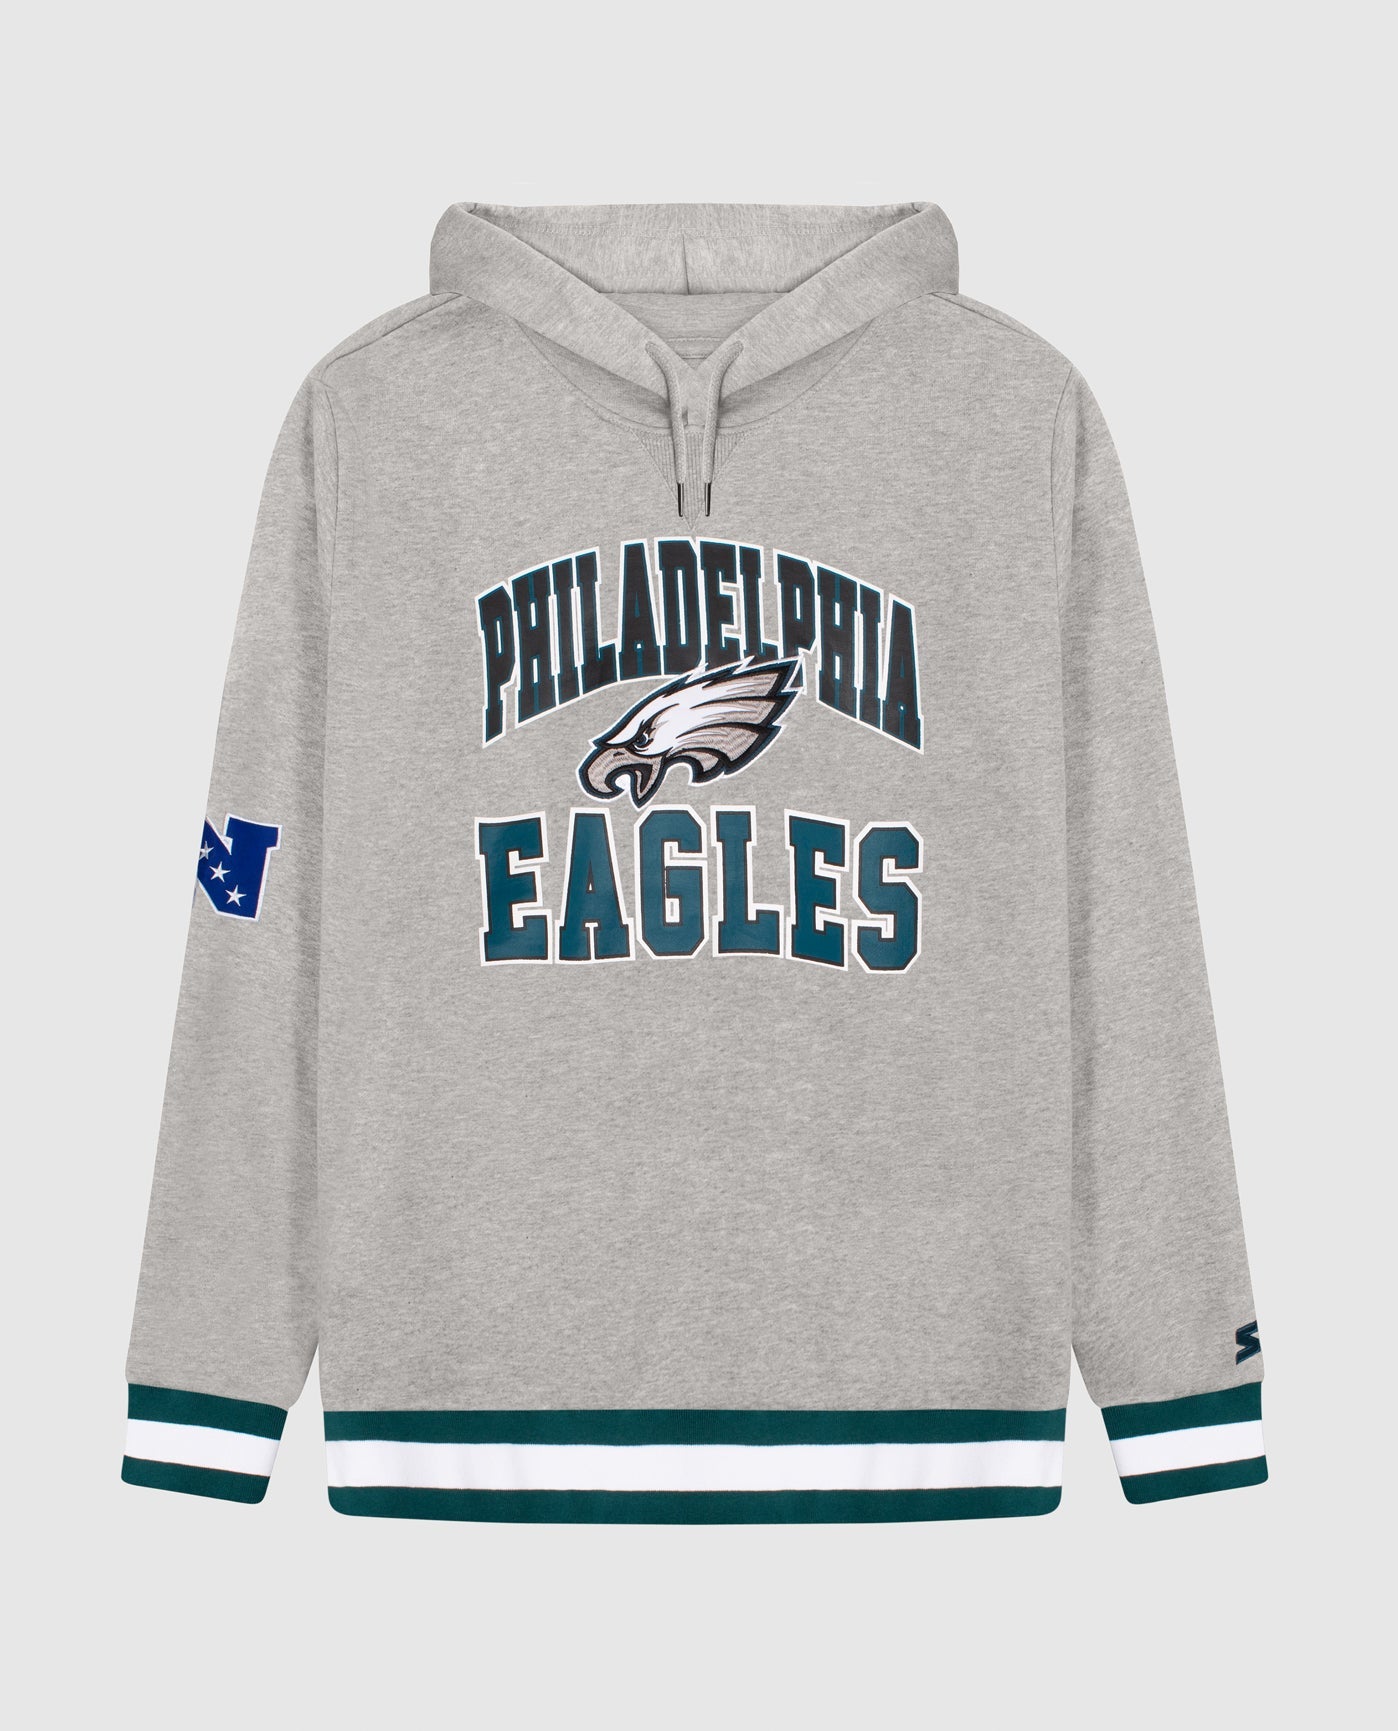 Philadelphia Eagles Sweatshirts in Philadelphia Eagles Team Shop